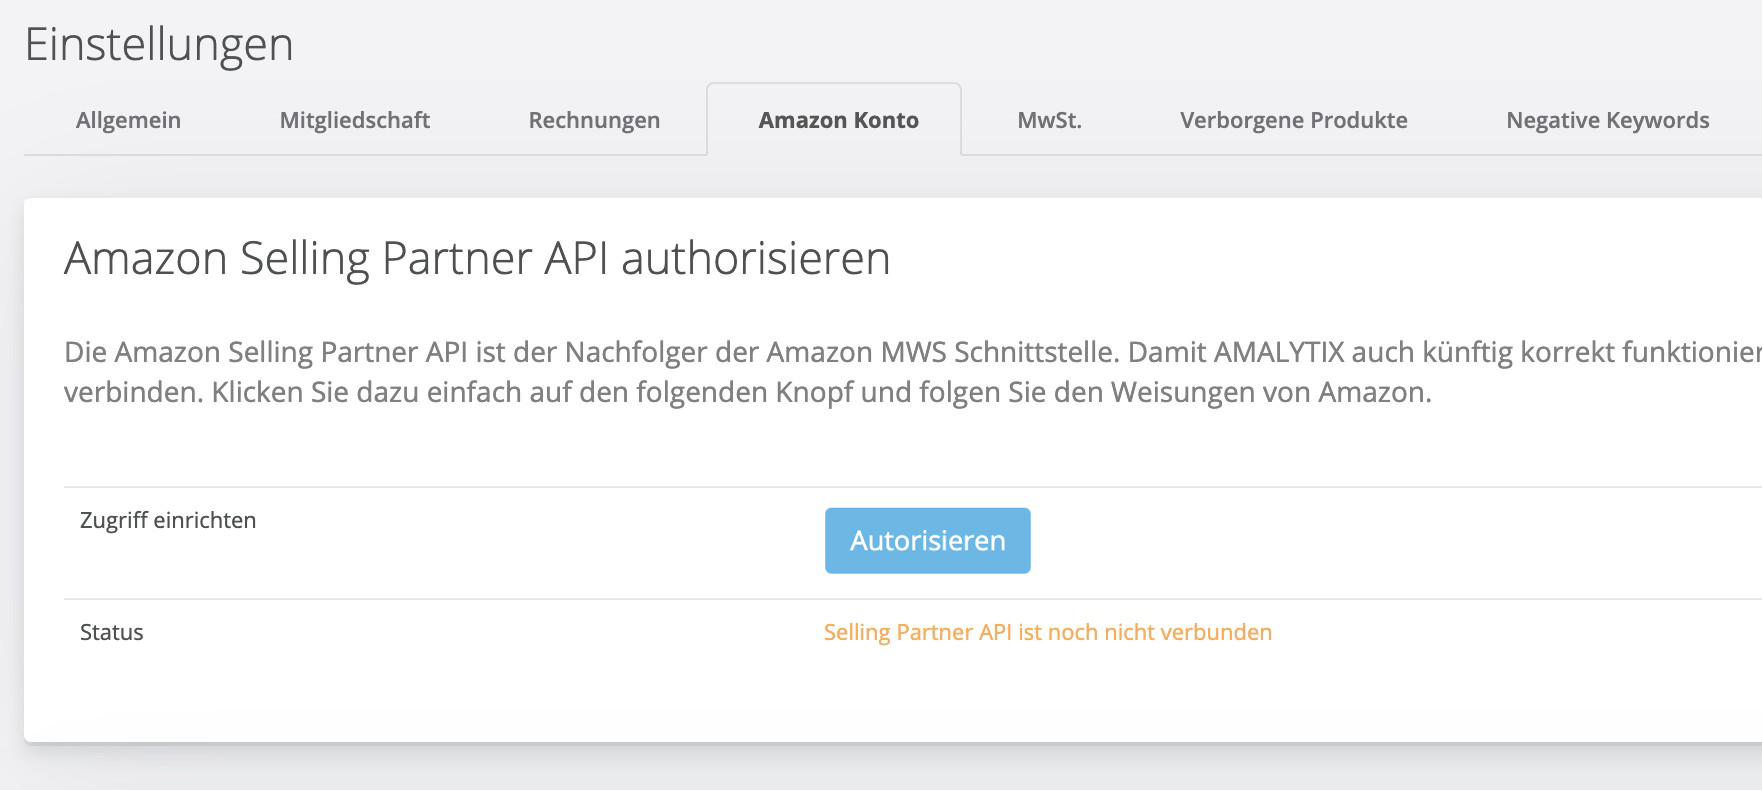 Amazon SP API in Amalytix authorisieren